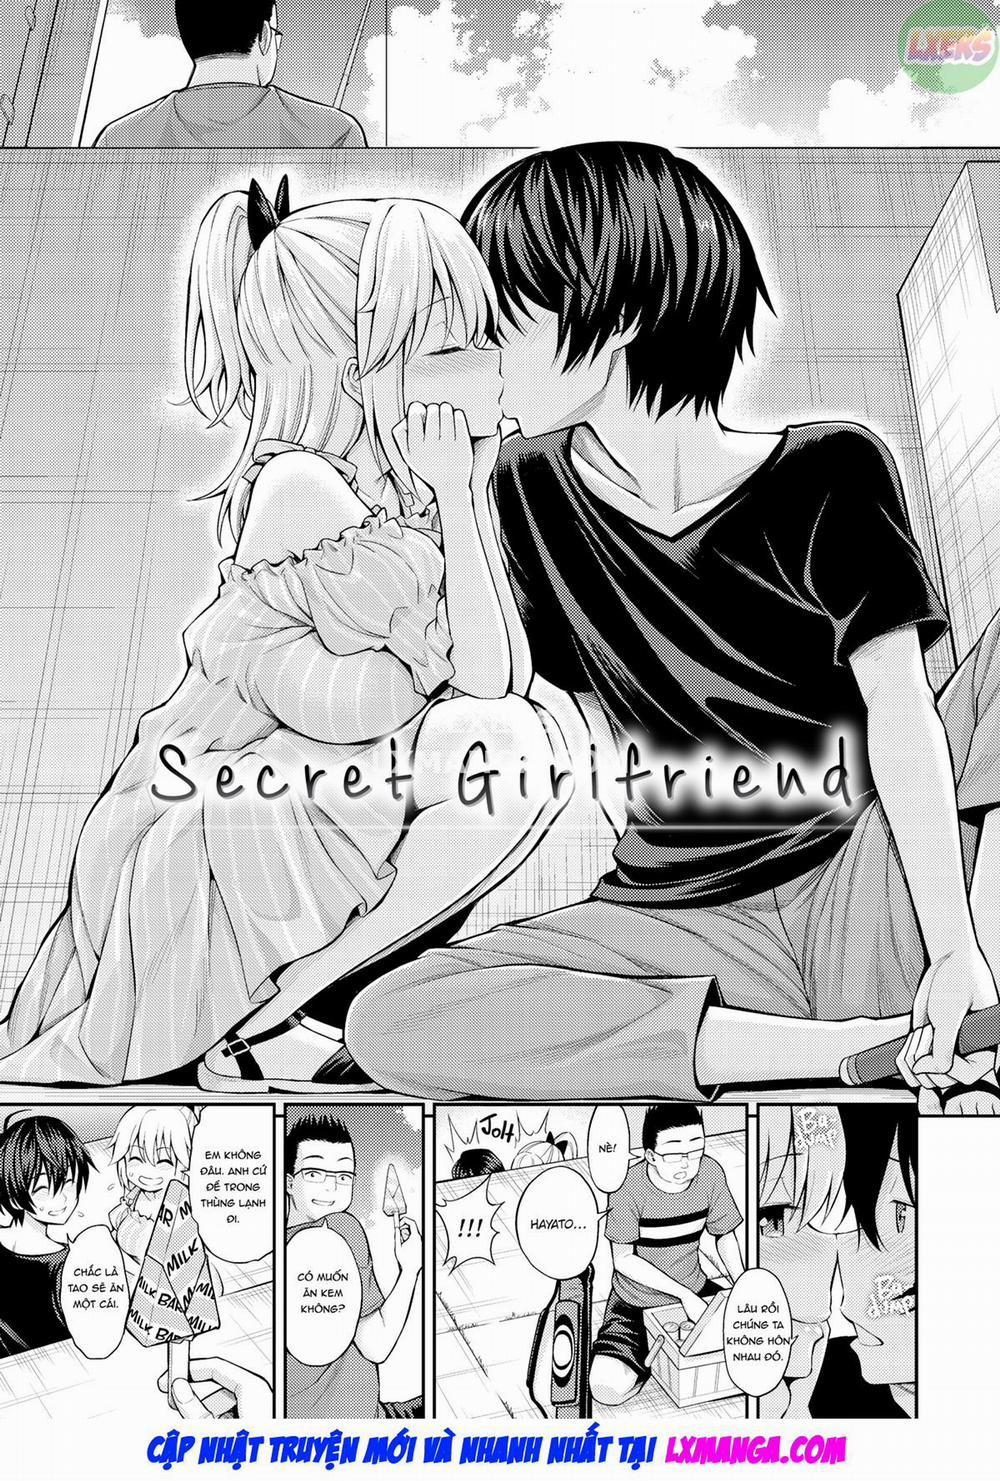 Secret Chương 2 Secret Girlfriend Trang 4